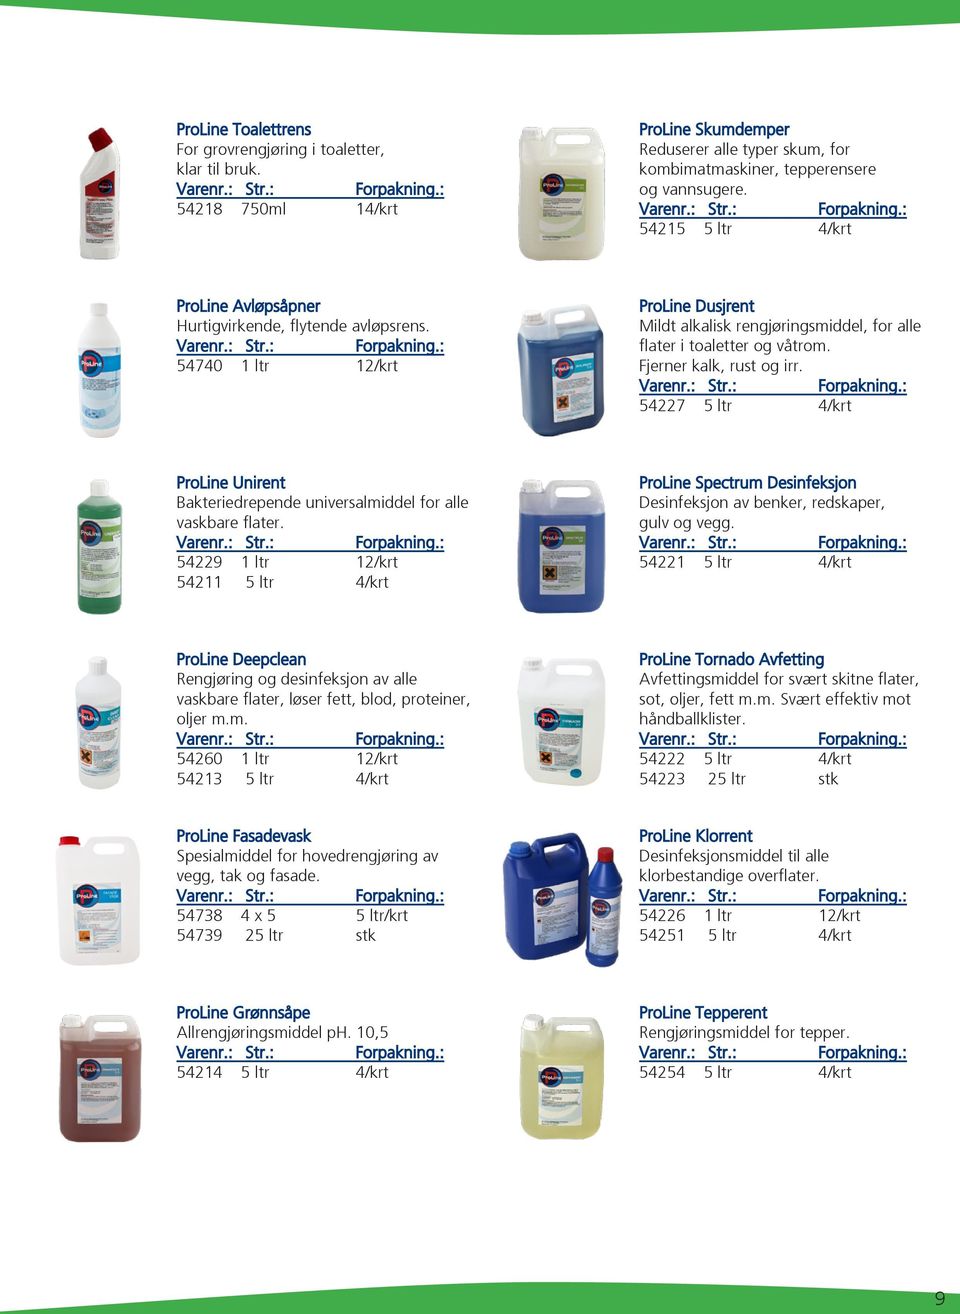 Fjerner kalk, rust og irr. 54227 5 ltr 4/krt ProLine Unirent Bakteriedrepende universalmiddel for alle vaskbare flater.